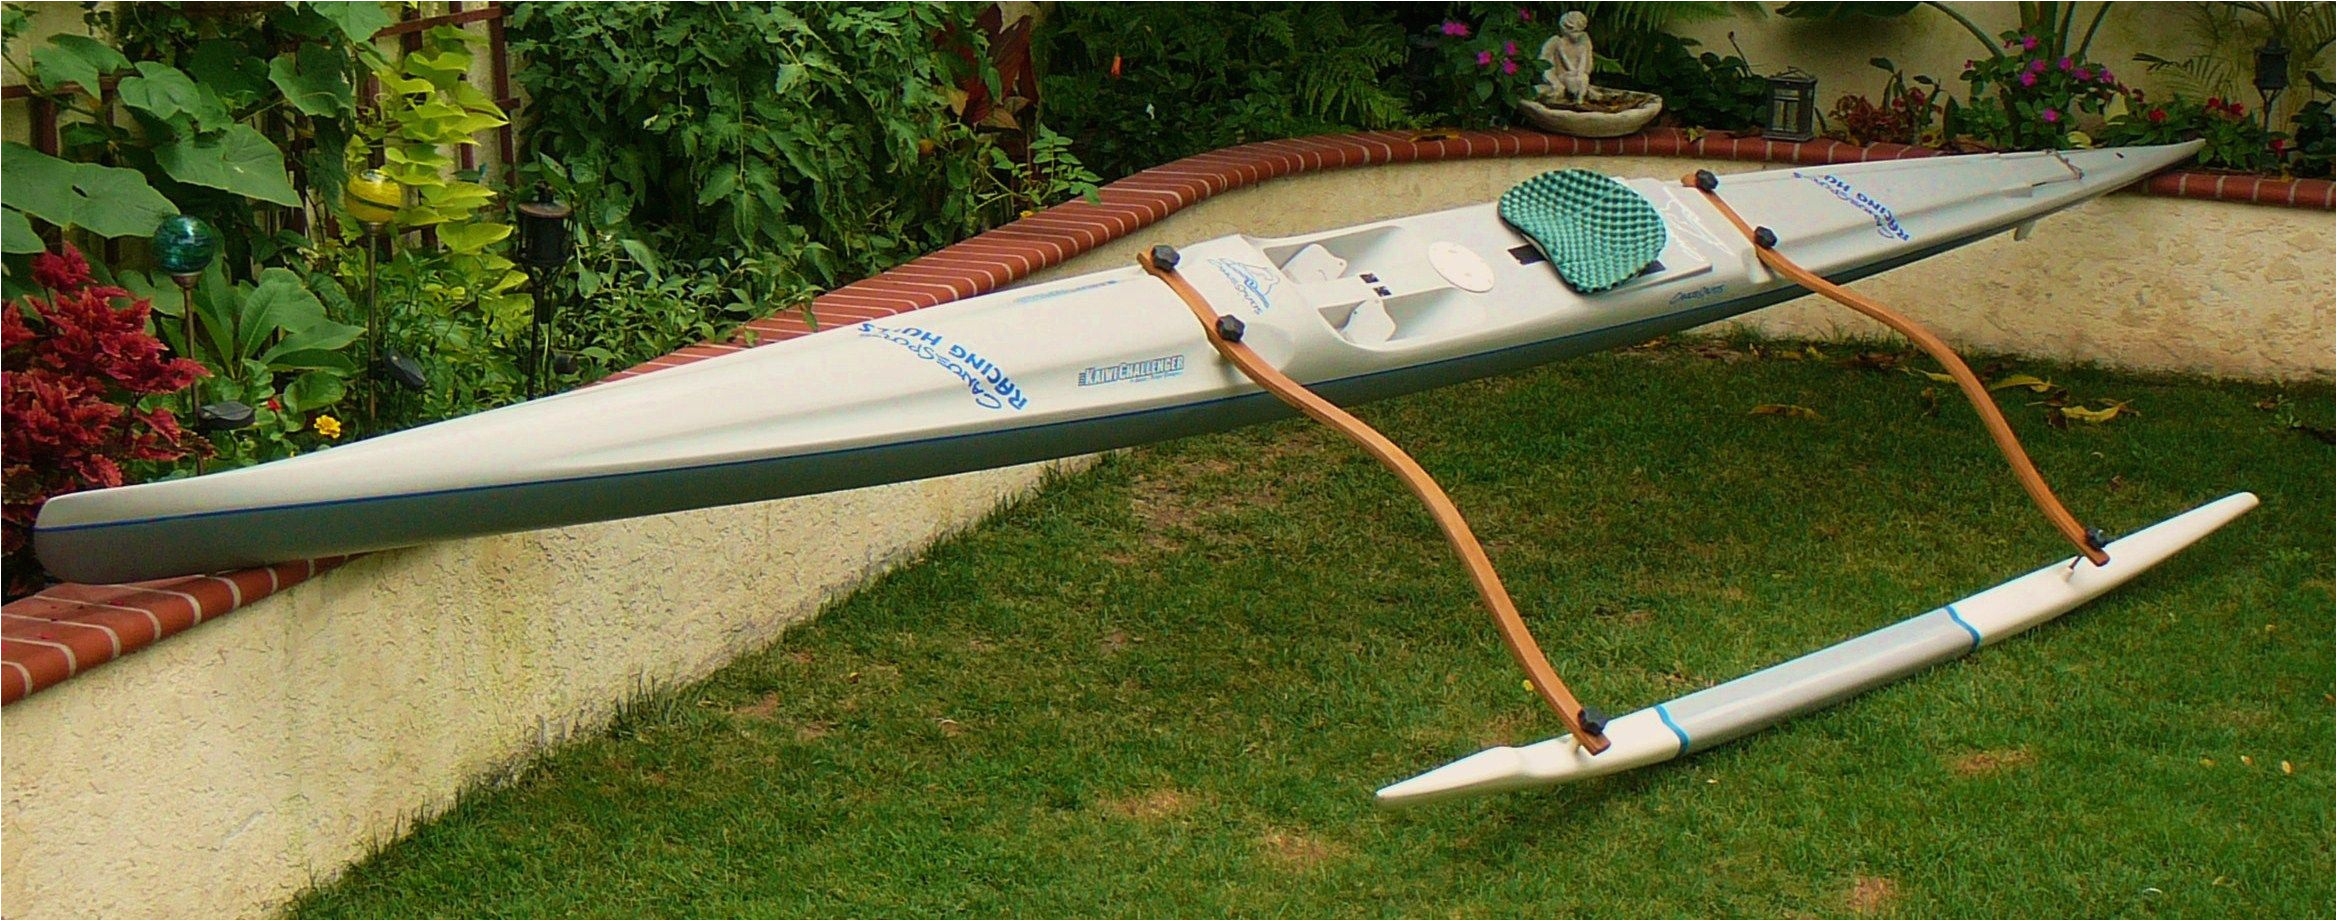 Homemade Double Kayak Roof Rack Image Result for Diy Kayak Outrigger Kayak Pinterest Kayak